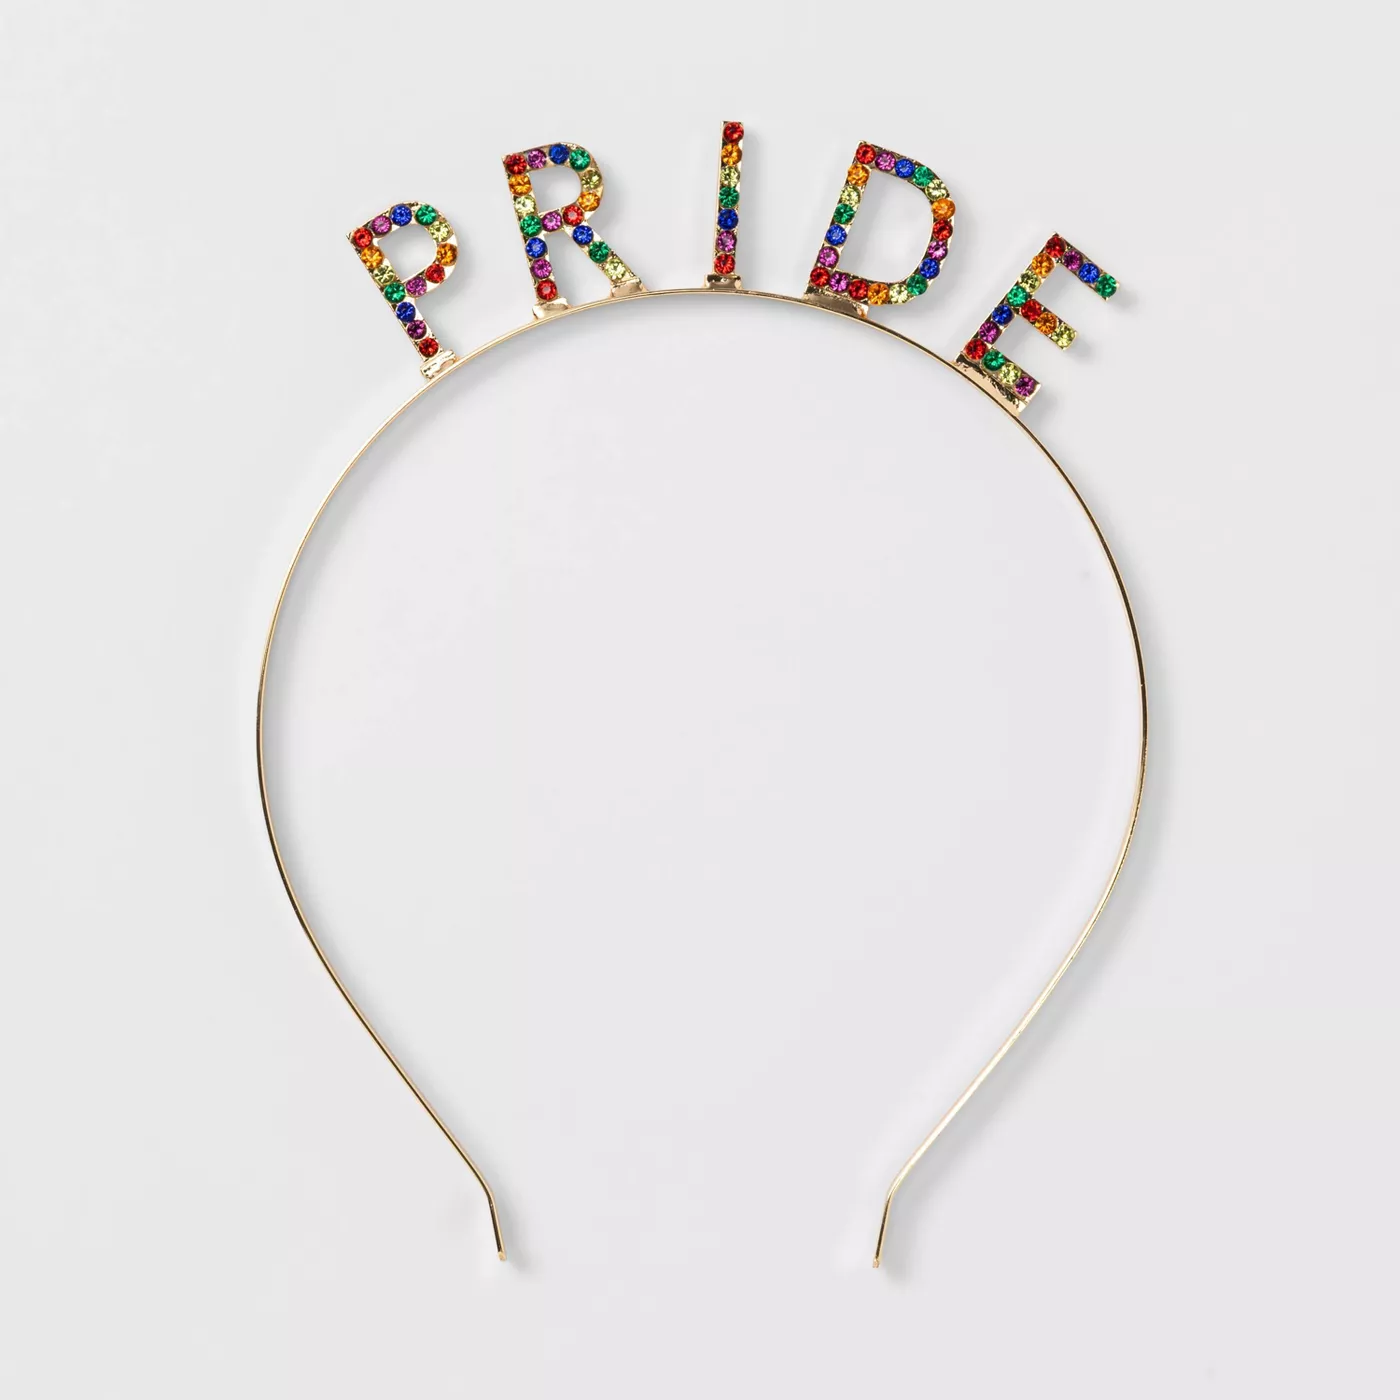 Pride Gender Inclusive Adult Rainbow Headband - image 1 of 4